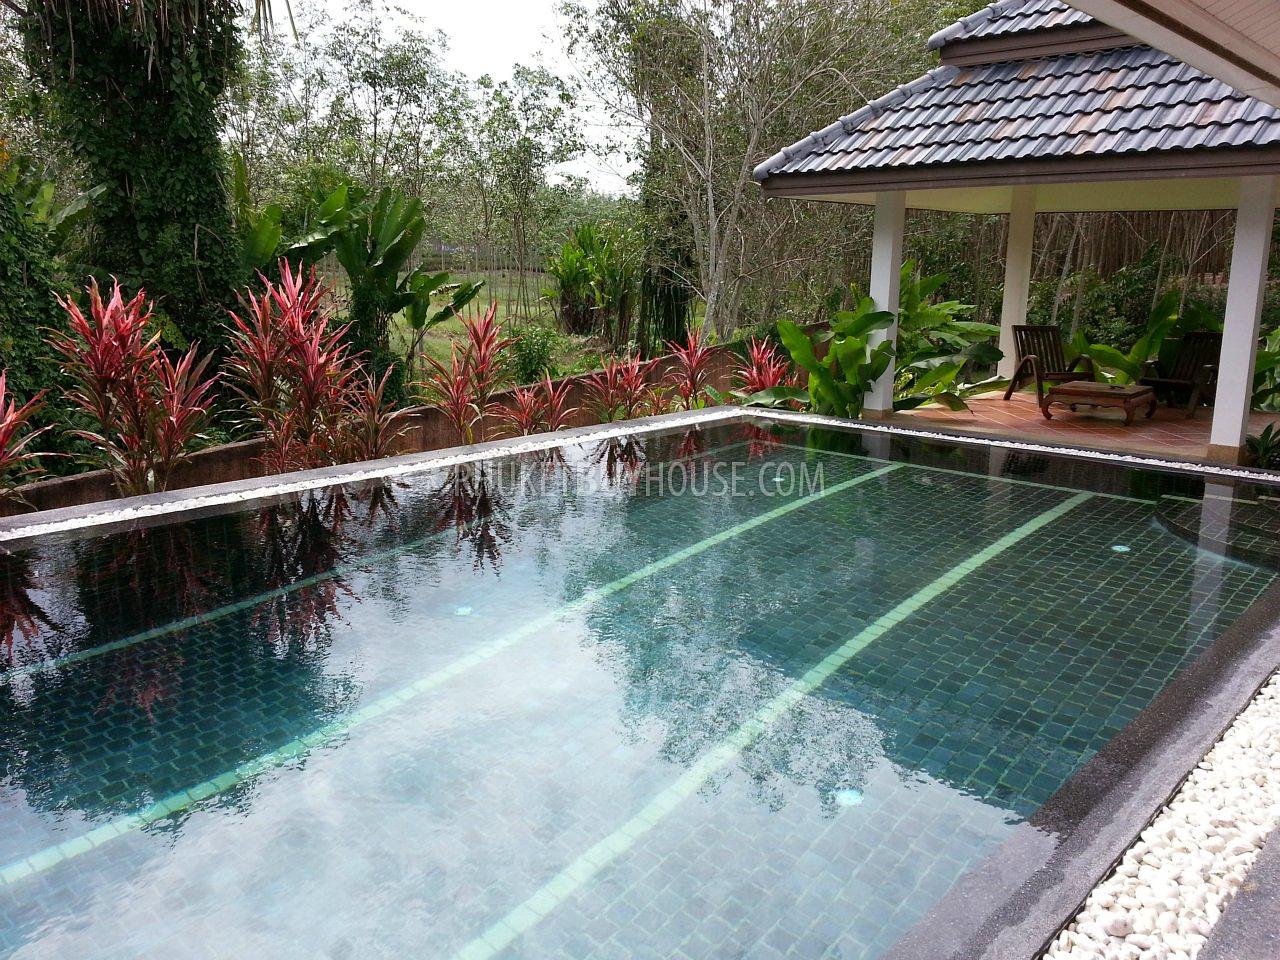 EAS3910: Hot! 4-bedroom modern pool villa on a 1 rai land plot near PIADS (UWC). Urgent sale!. Photo #30